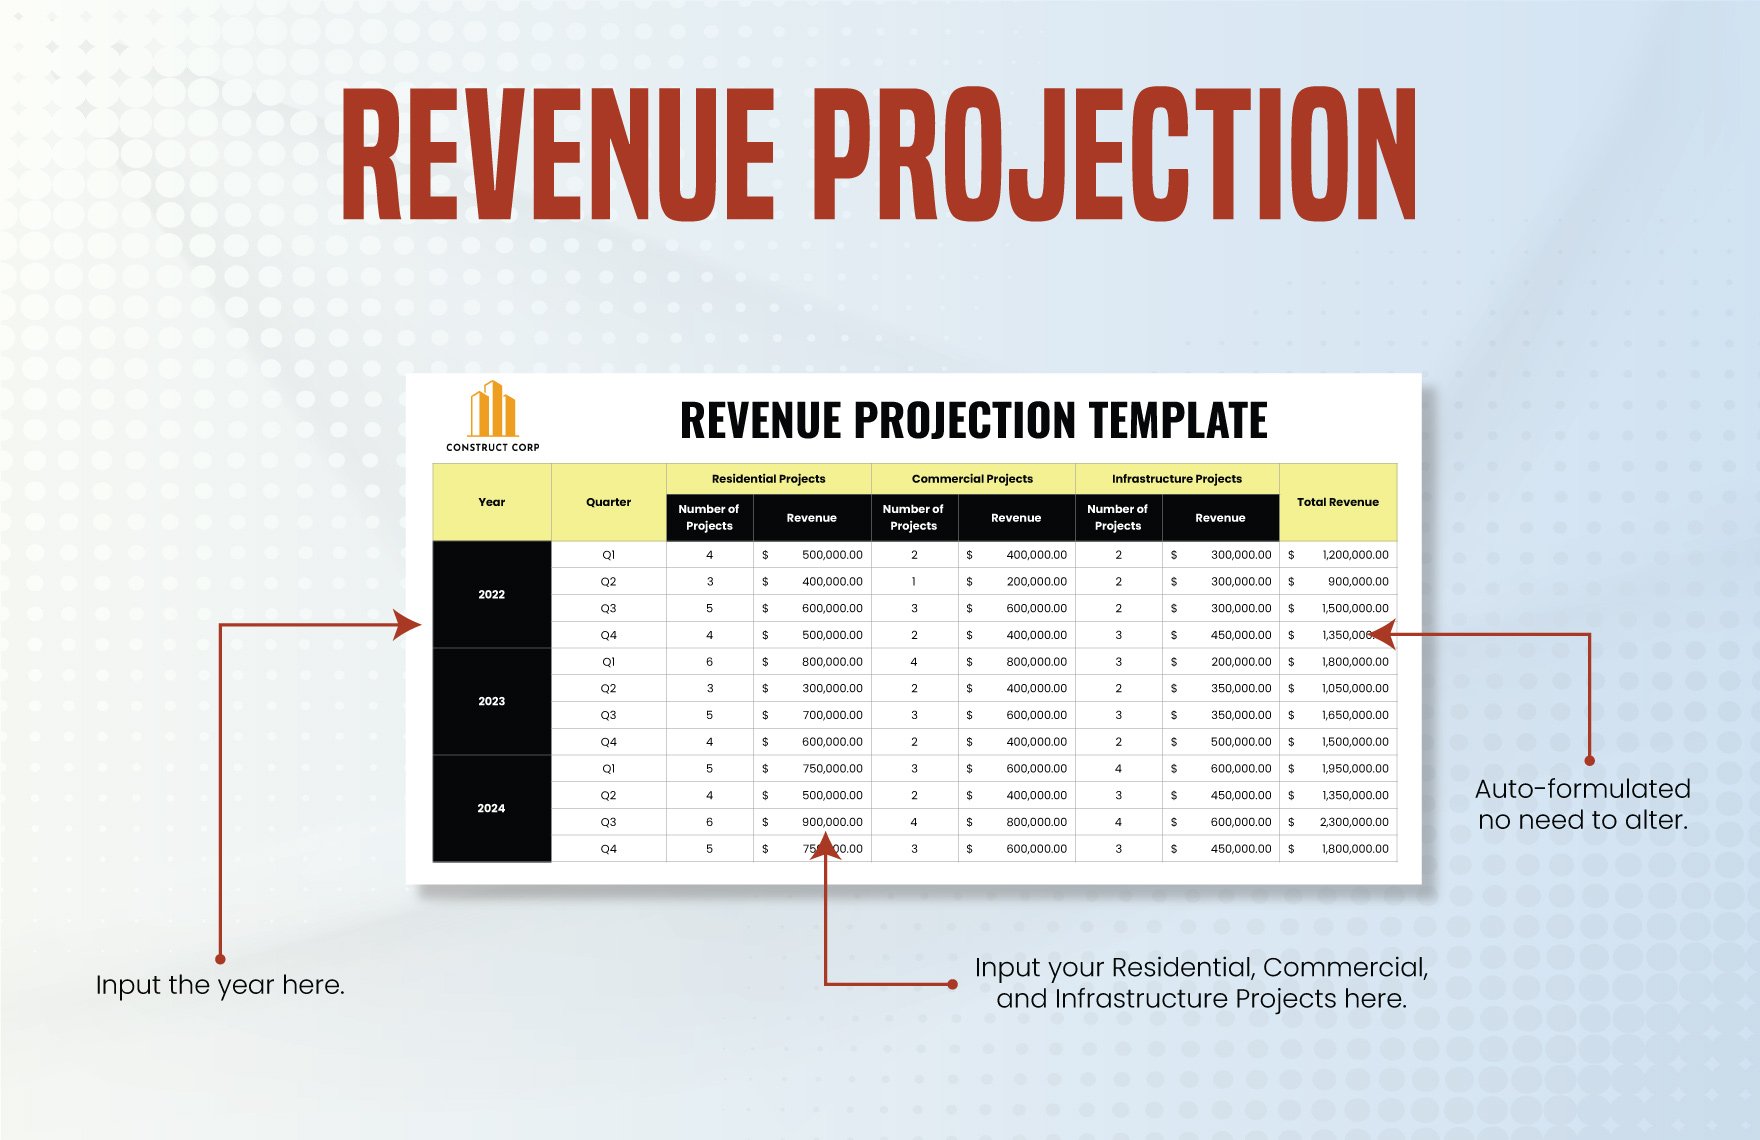 Revenue Projection Template